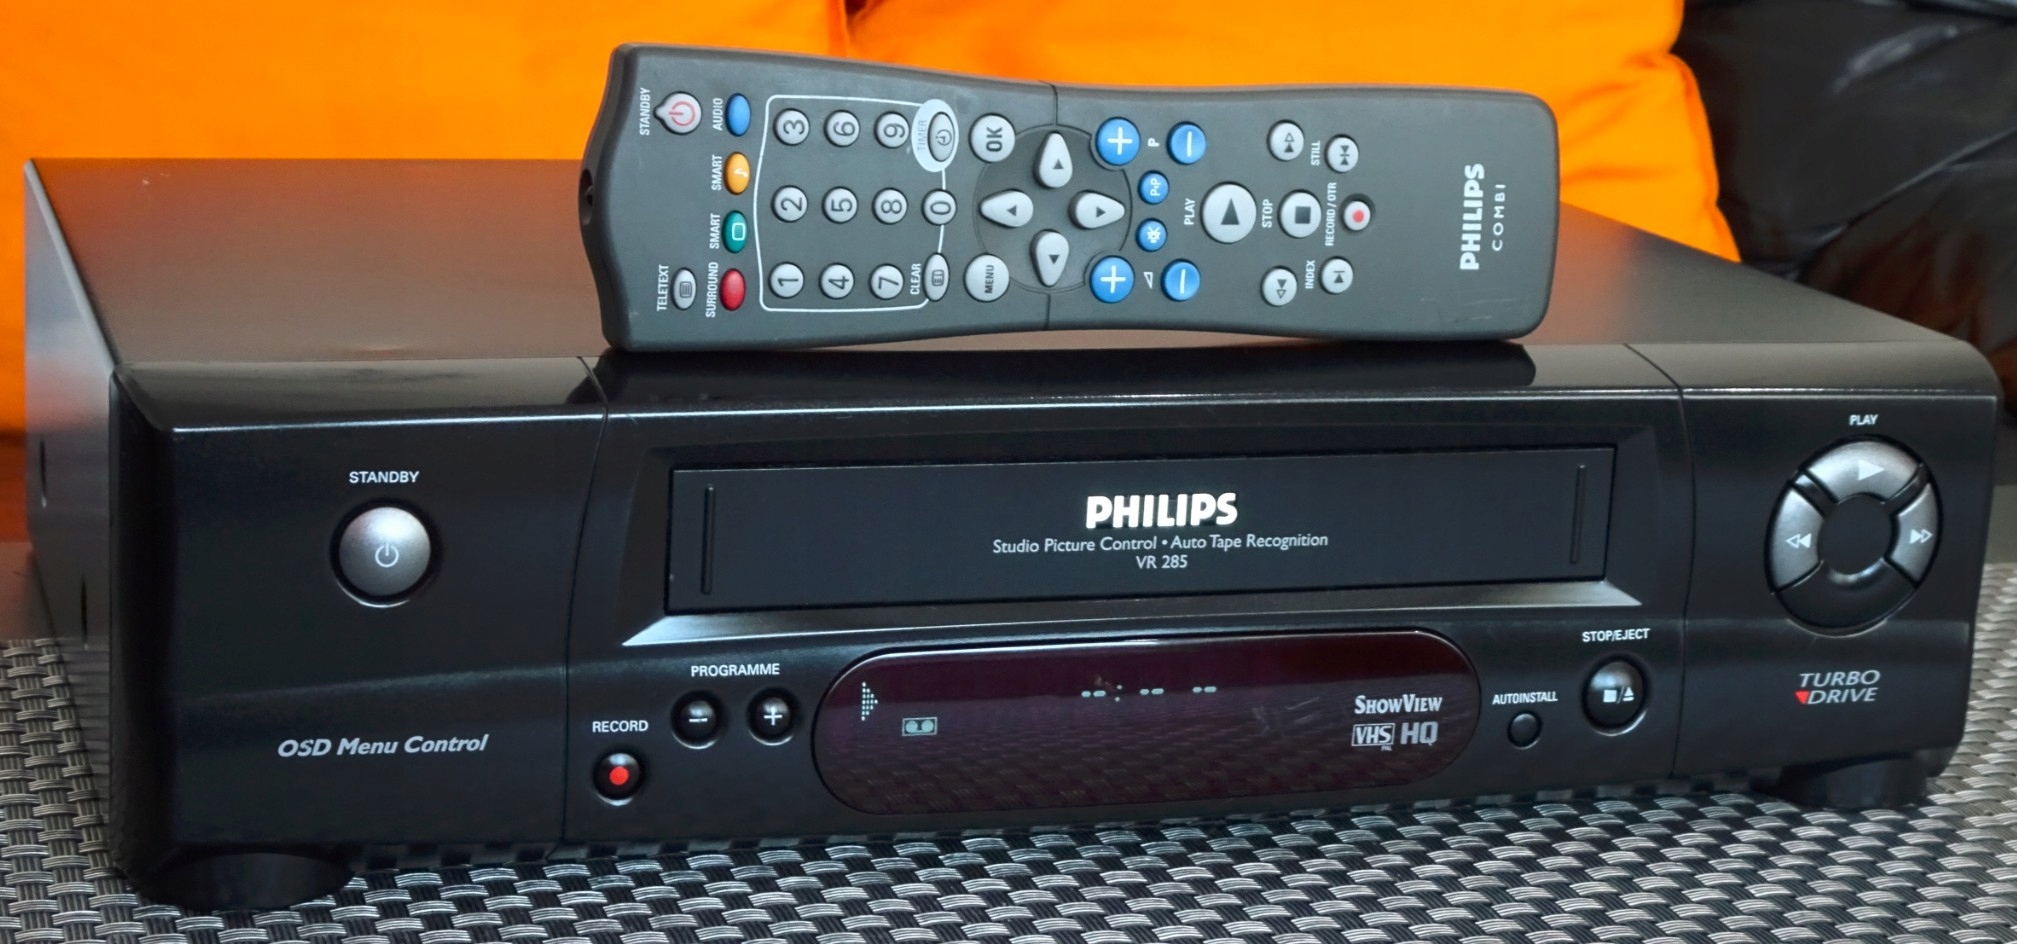 Philips vr. Видеомагнитофон Philips VR 888. Philips vr700/58. Видеомагнитофон Philips VR 969. Philips VR 820/58.